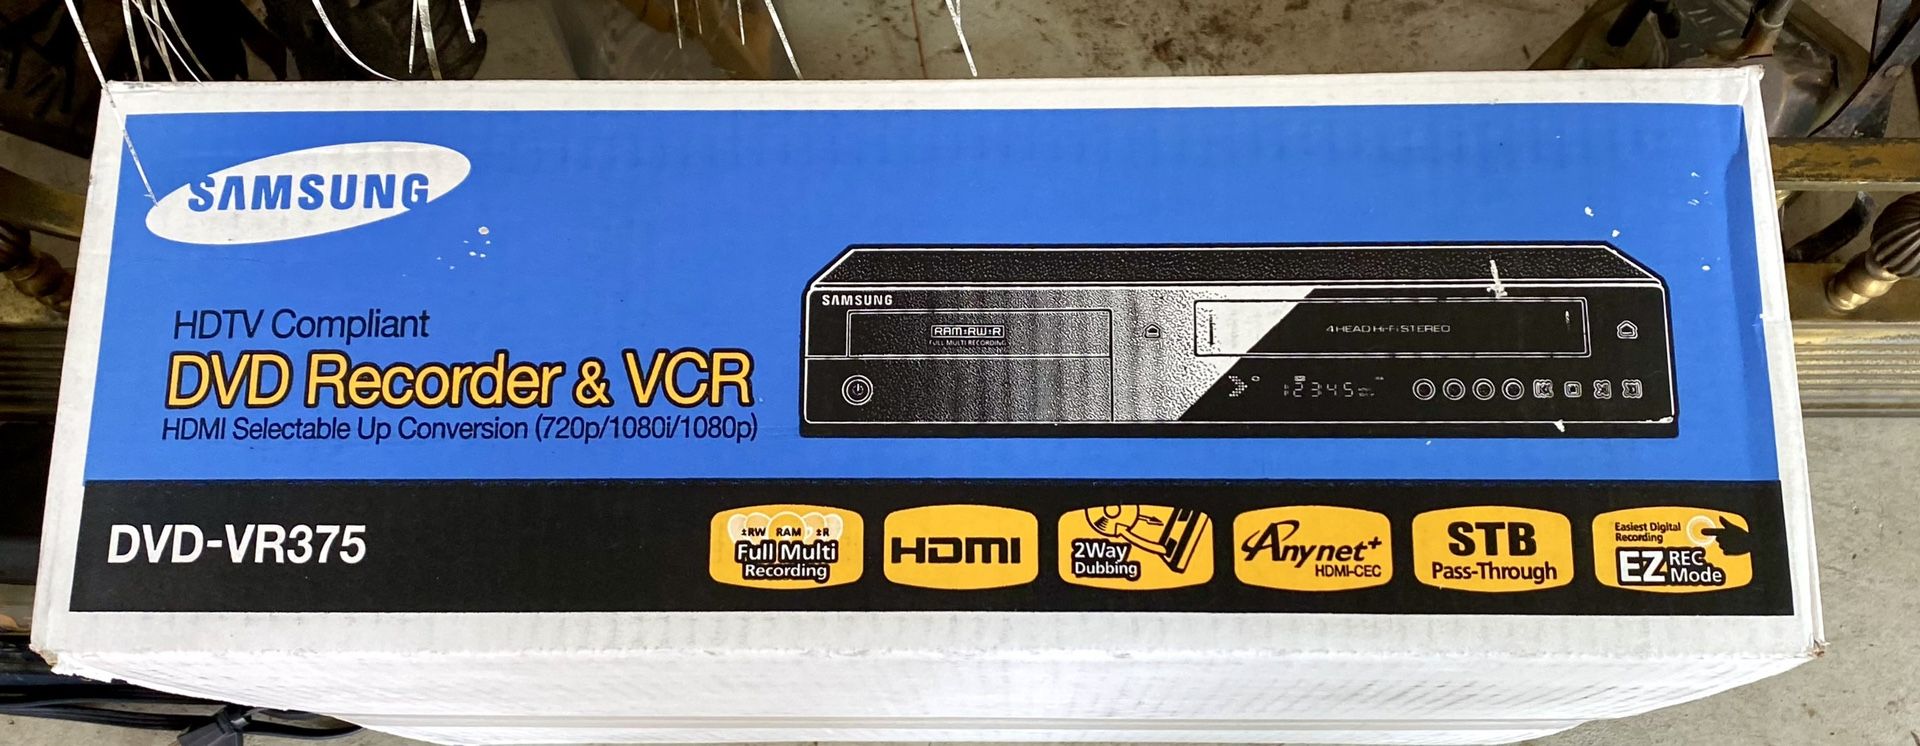 niezen haar bemanning SAMSUNG DVD Recorder & VCR DVD-VR375 for Sale in Santa Monica, CA - OfferUp